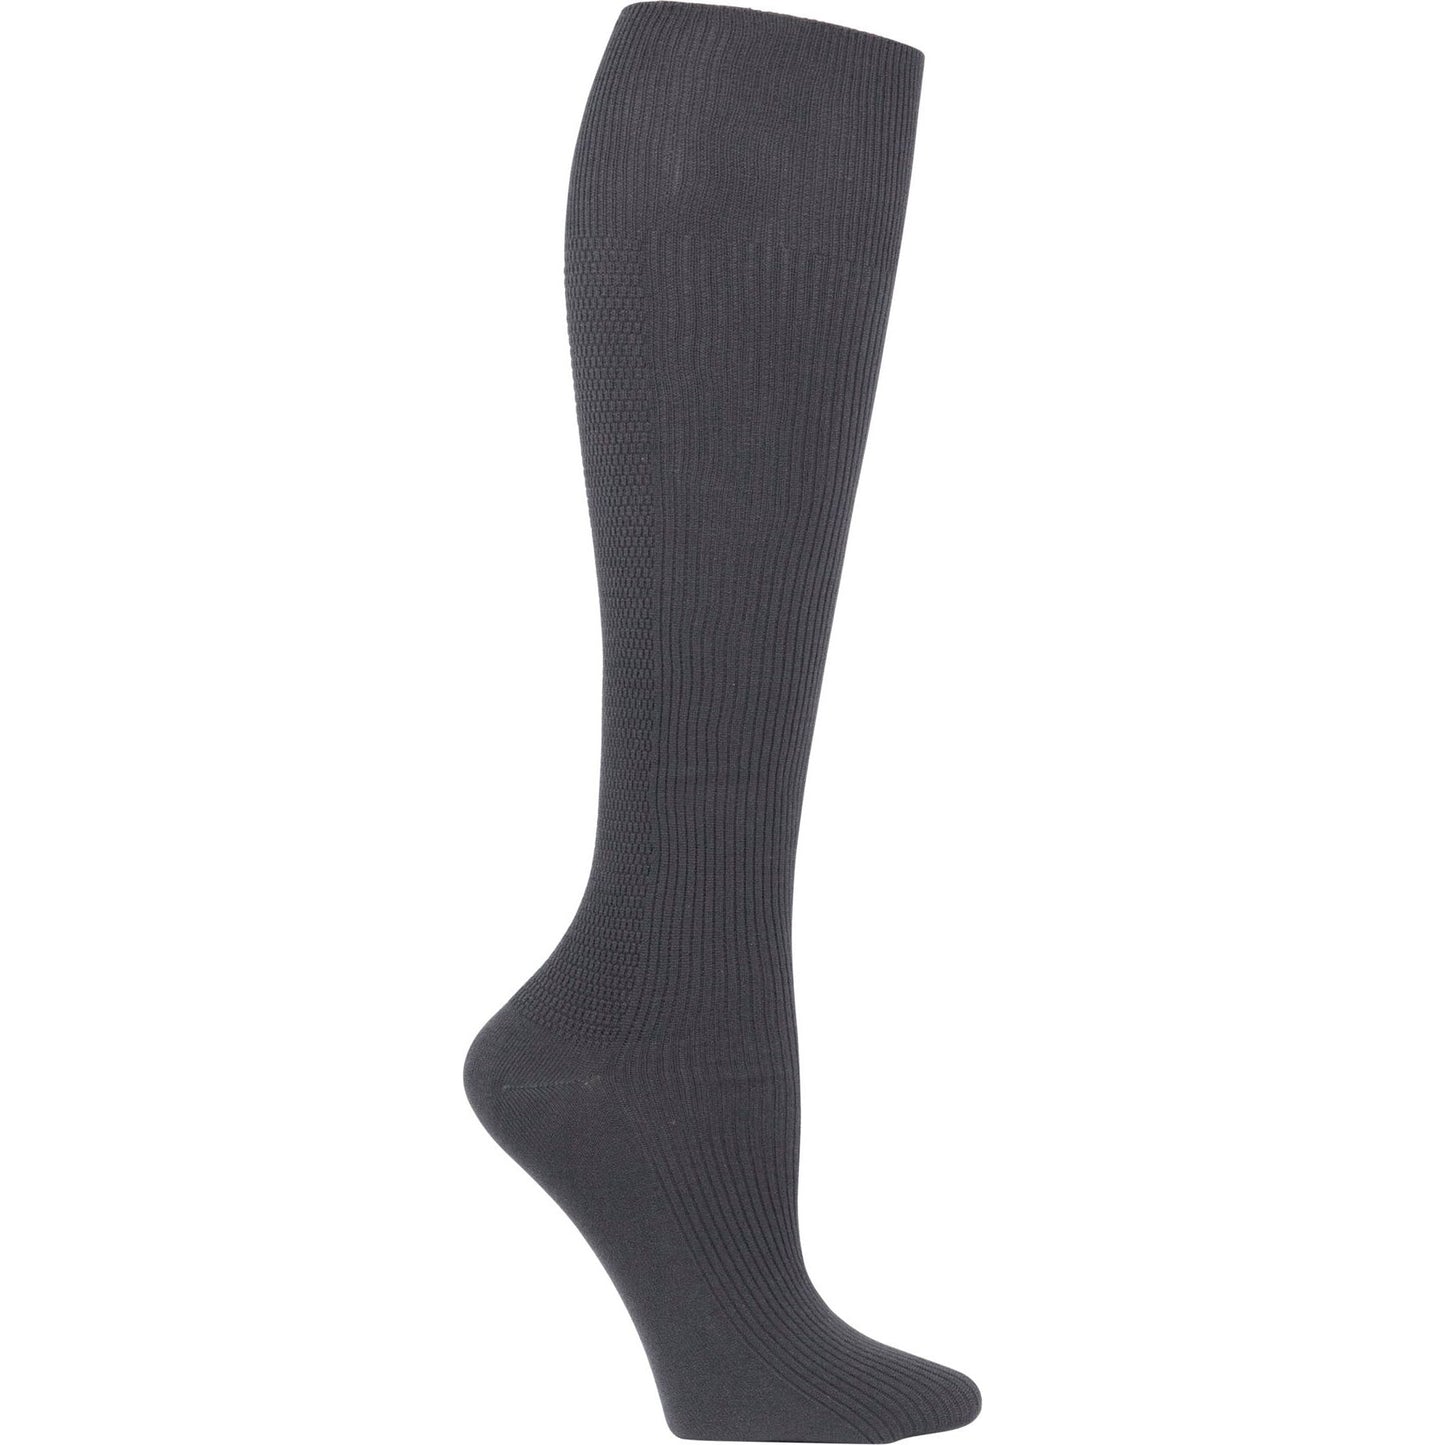 4 single pair of Mens Support Socks